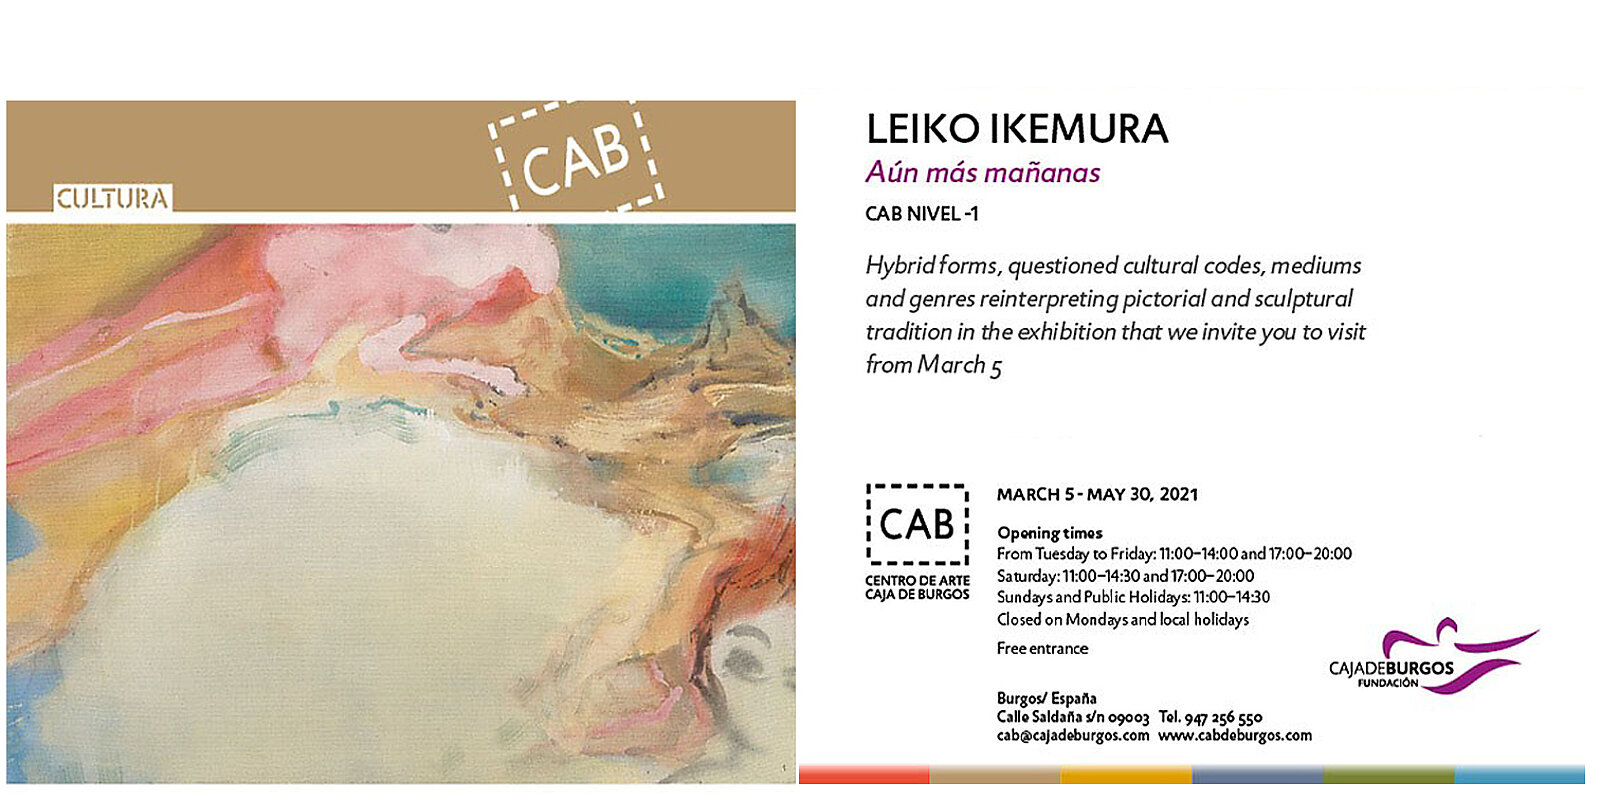 Invitation to the exhibition Leiko Ikemura at the Caja de Burgos CAB Art Center, Burgos, Spain